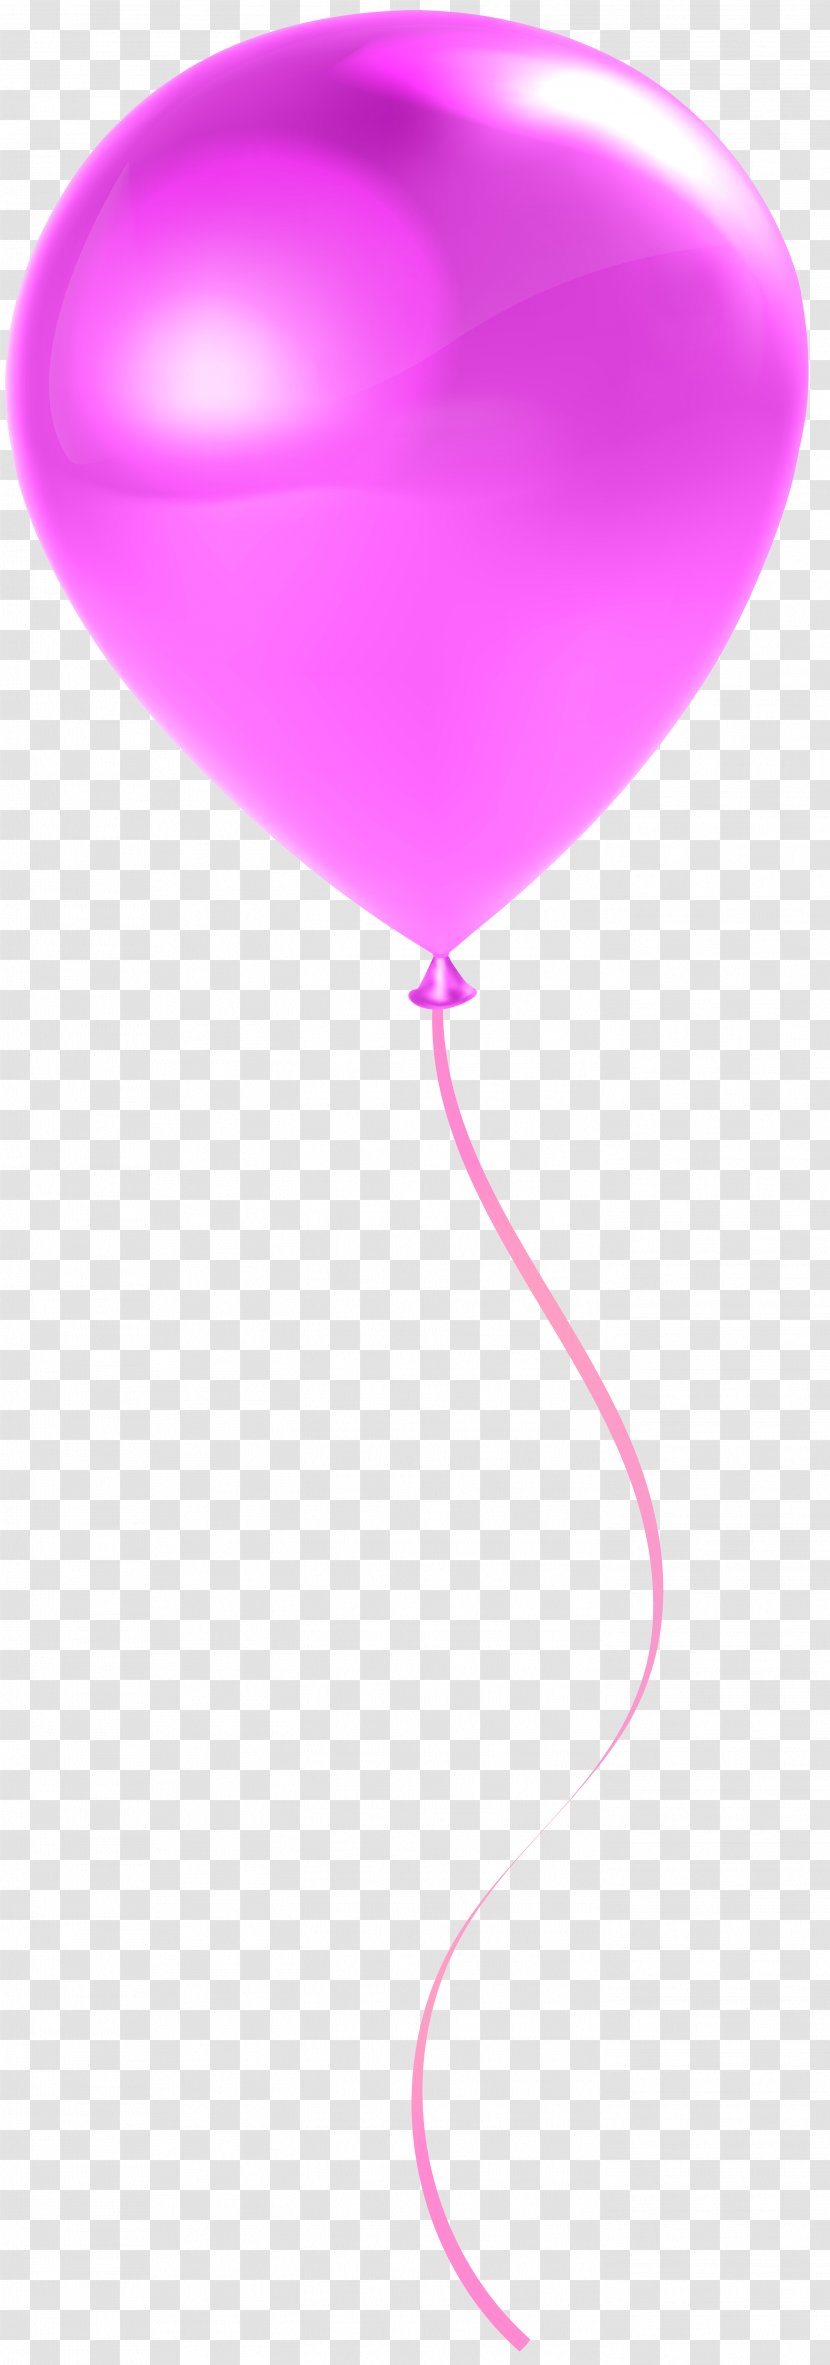 Balloon Petal Design Product - Single Pink Transparent Clip Art Transparent PNG